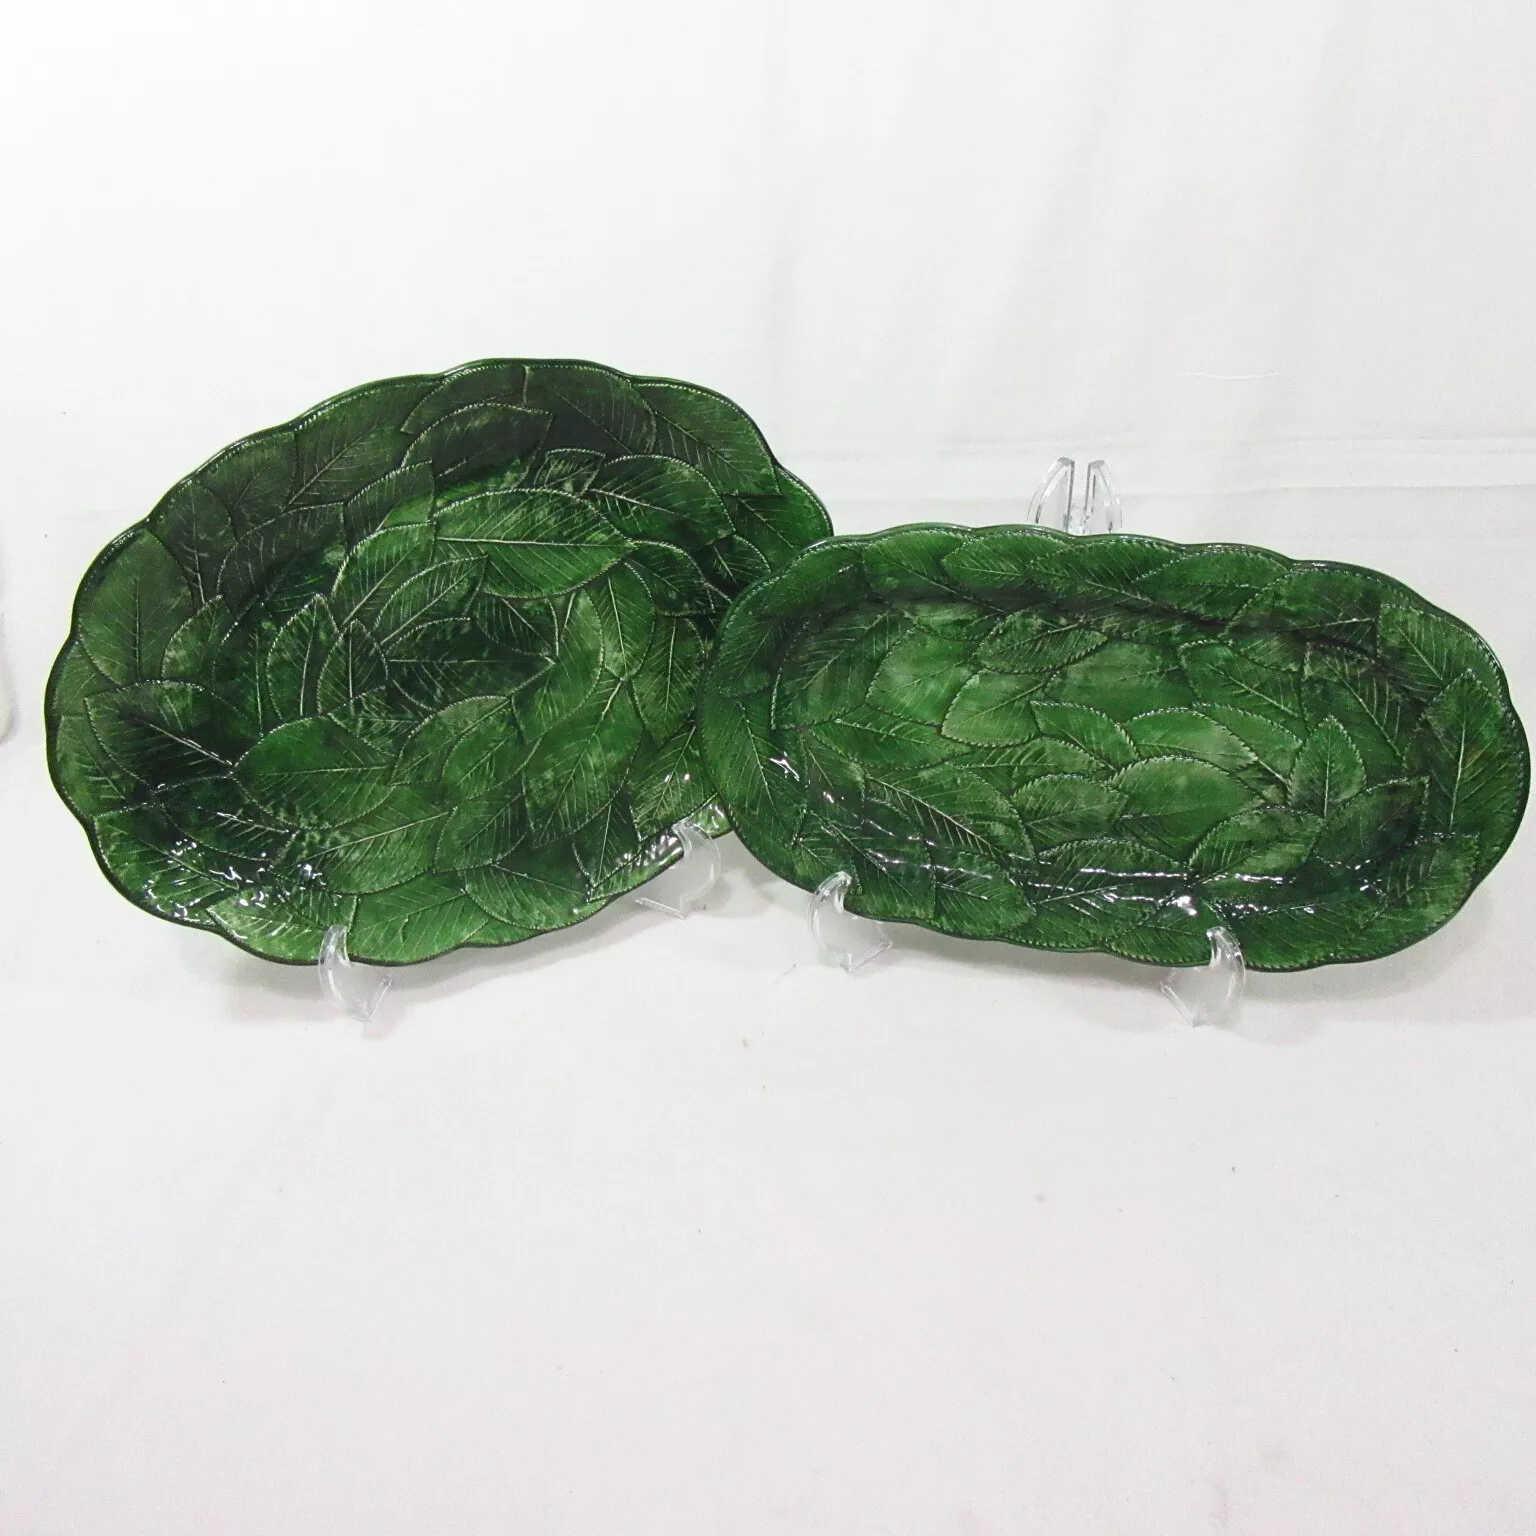 VIETRI FOGLIA Leonardo Italy Majolica Leaf Green 2-PC Serving Platters - $180.00